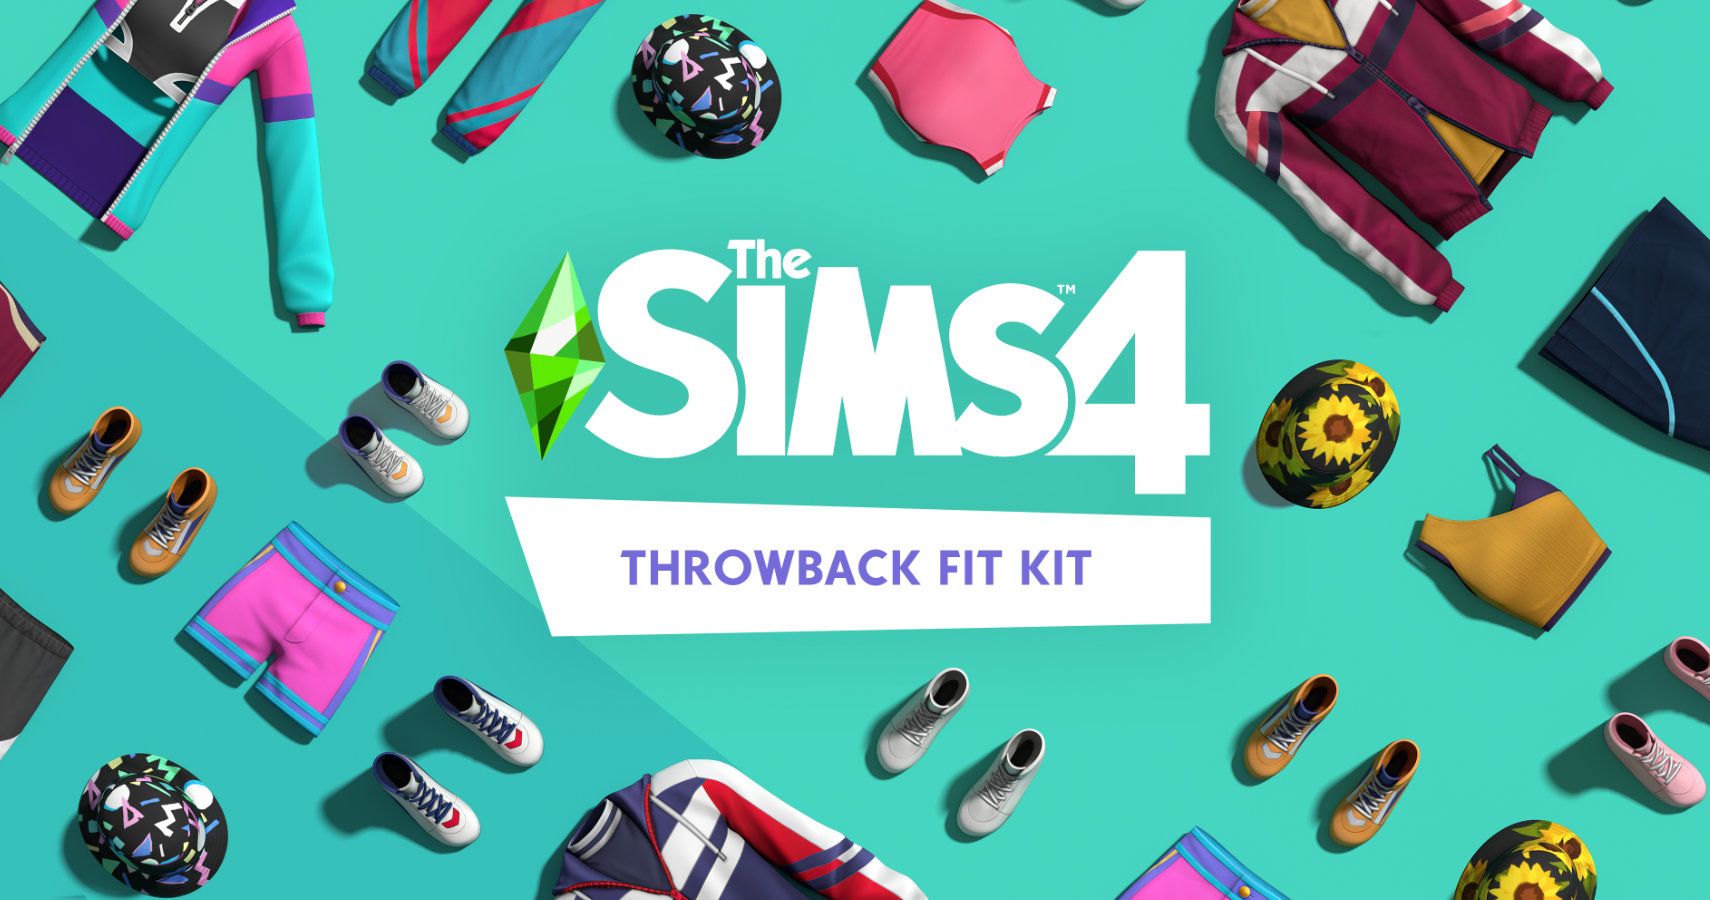 Throwback kit items behind a sims 4 logo.